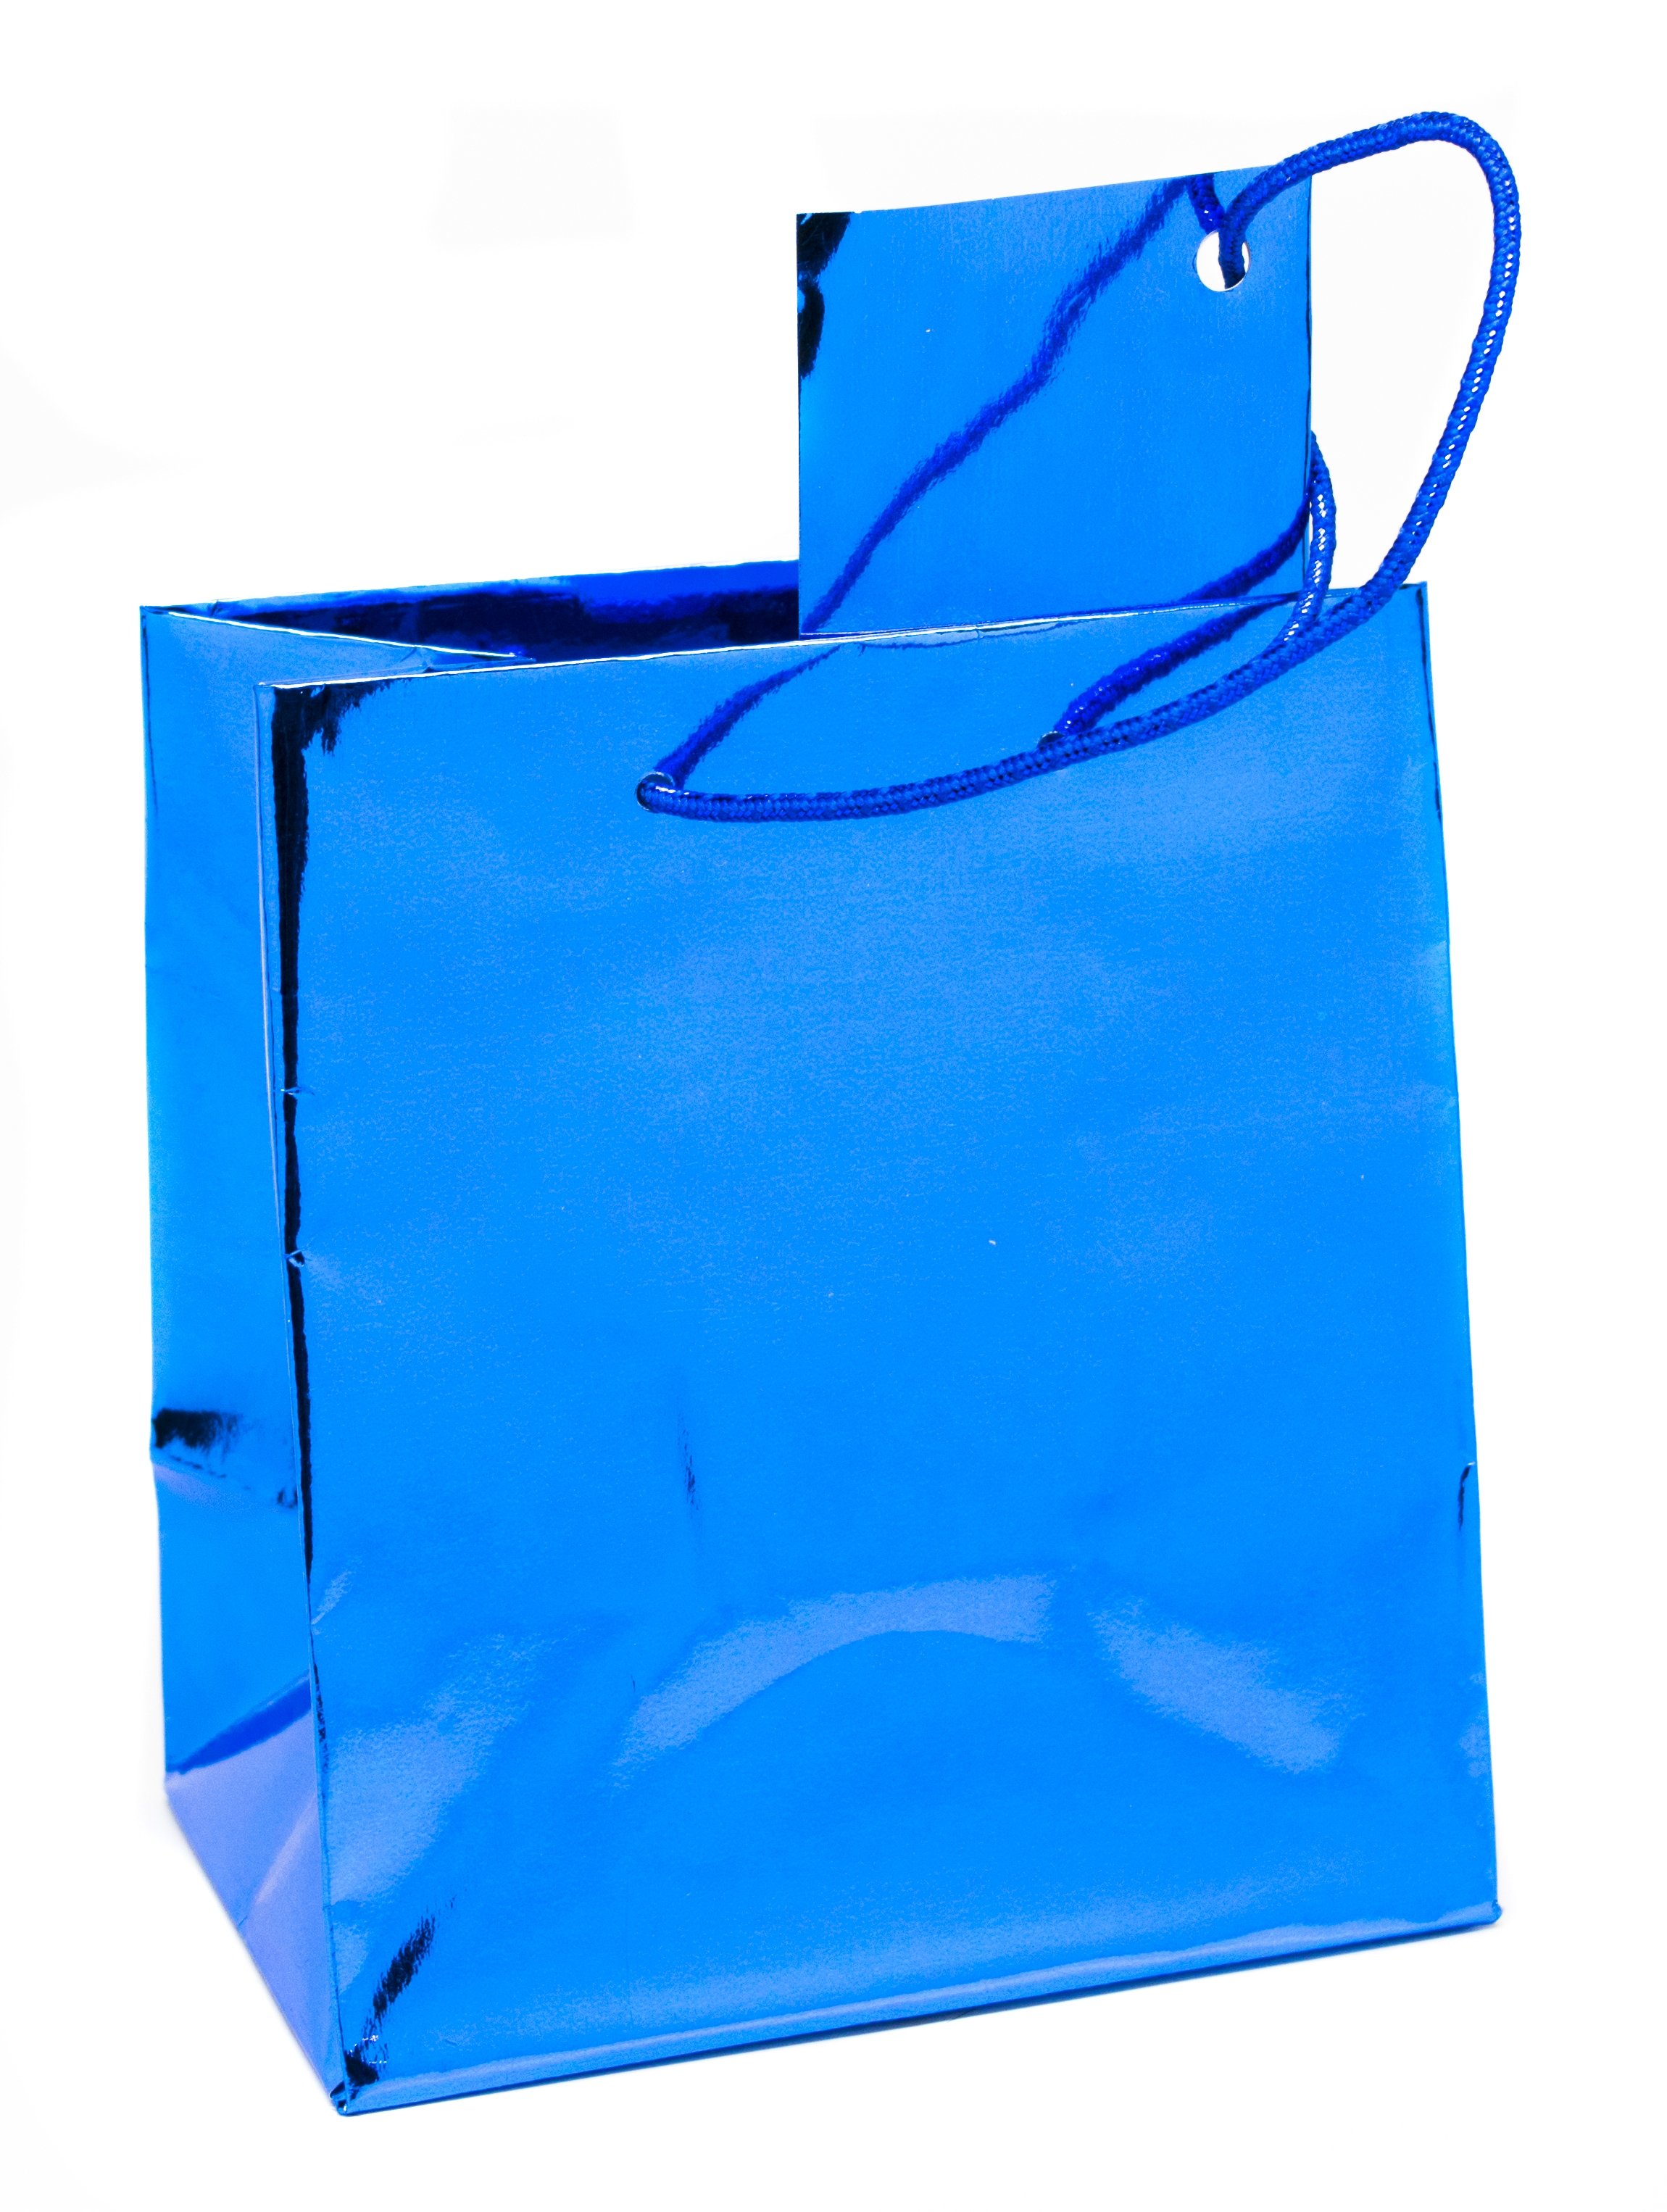 Download Novel Box™ Metallic Glossy Euro Tote Paper Gift Bag Bundle, 20 pack | eBay